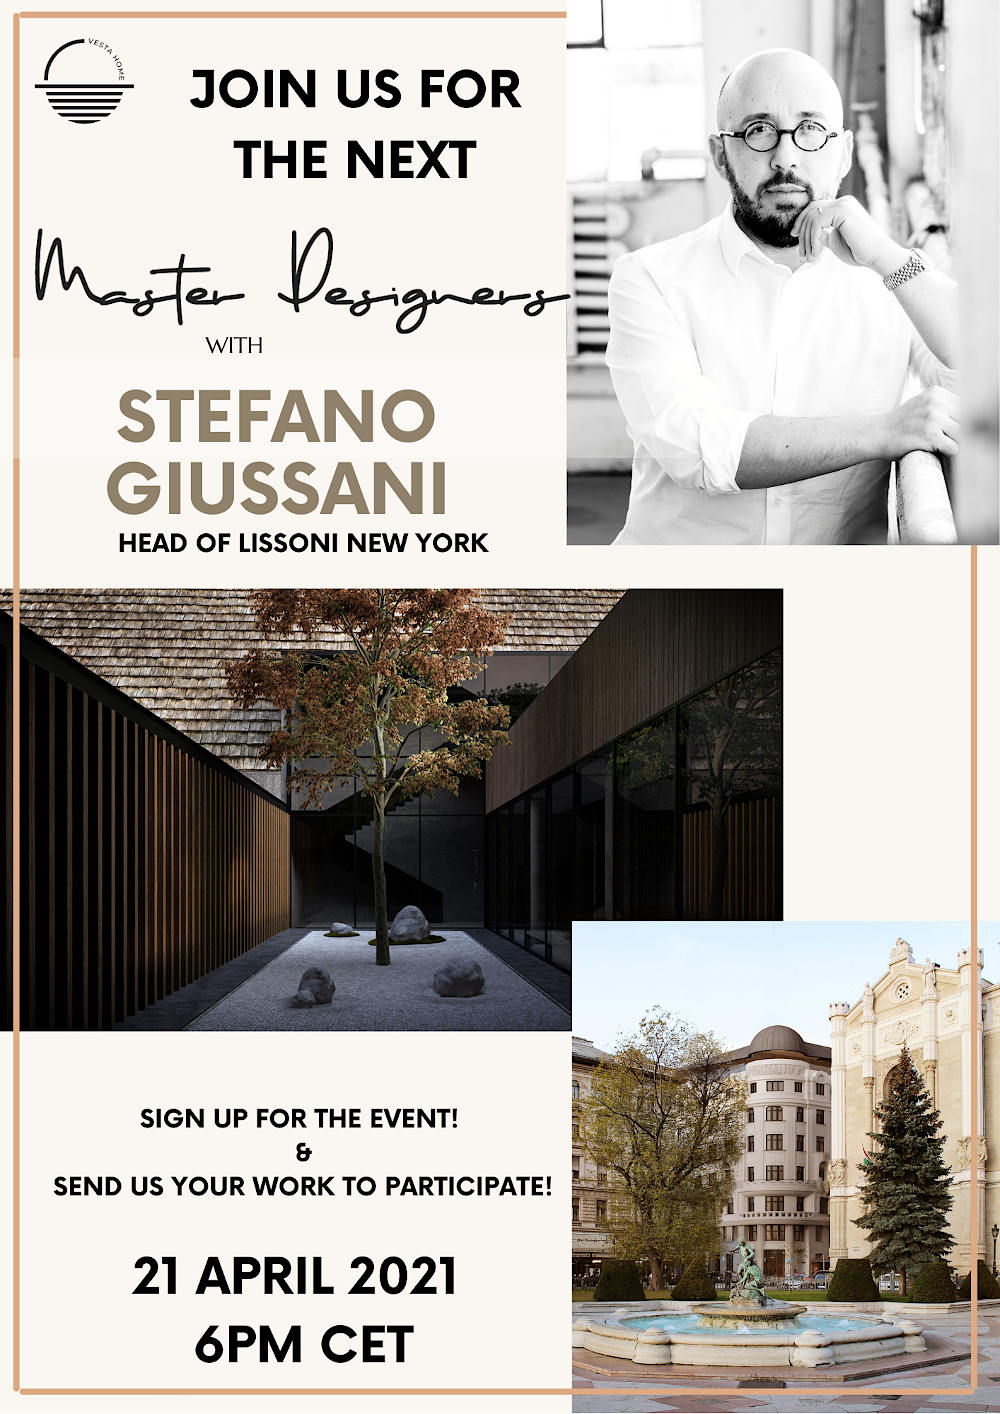 Vesta Home - Master Designers with Stefano Giussani